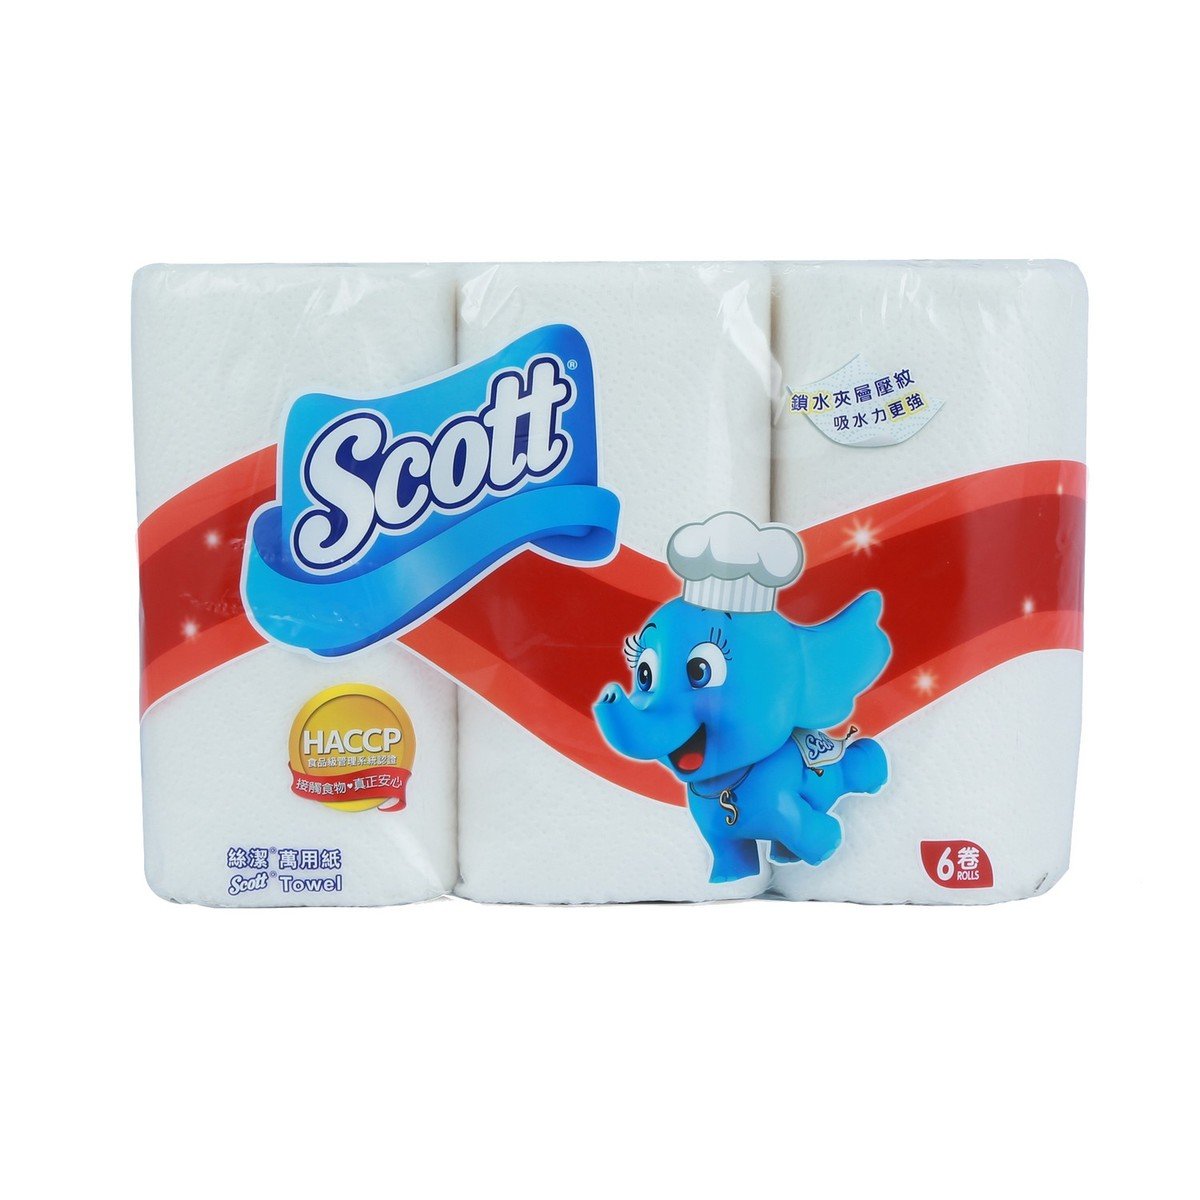 Scott Kitchen Towel 6pcs